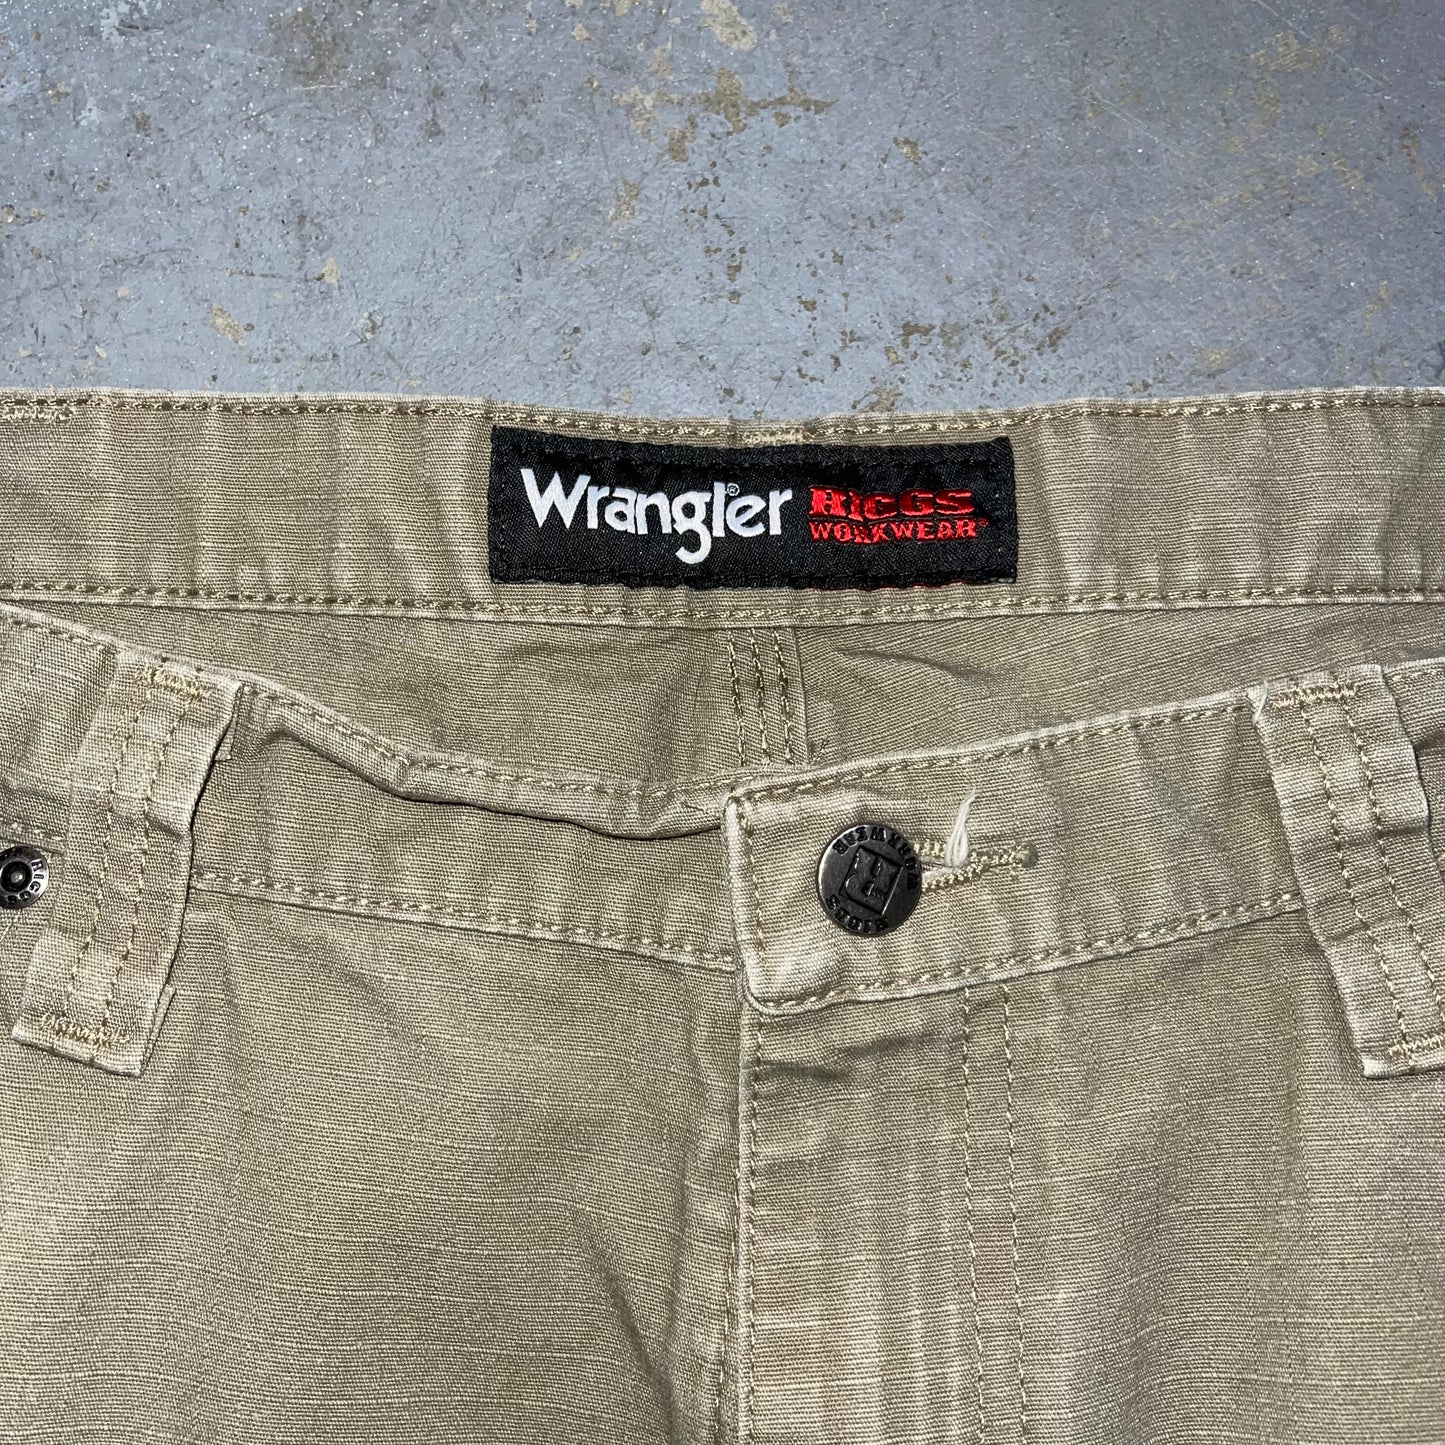 Wrangler Riggs Workwear Cargo Pants. Size 38x32